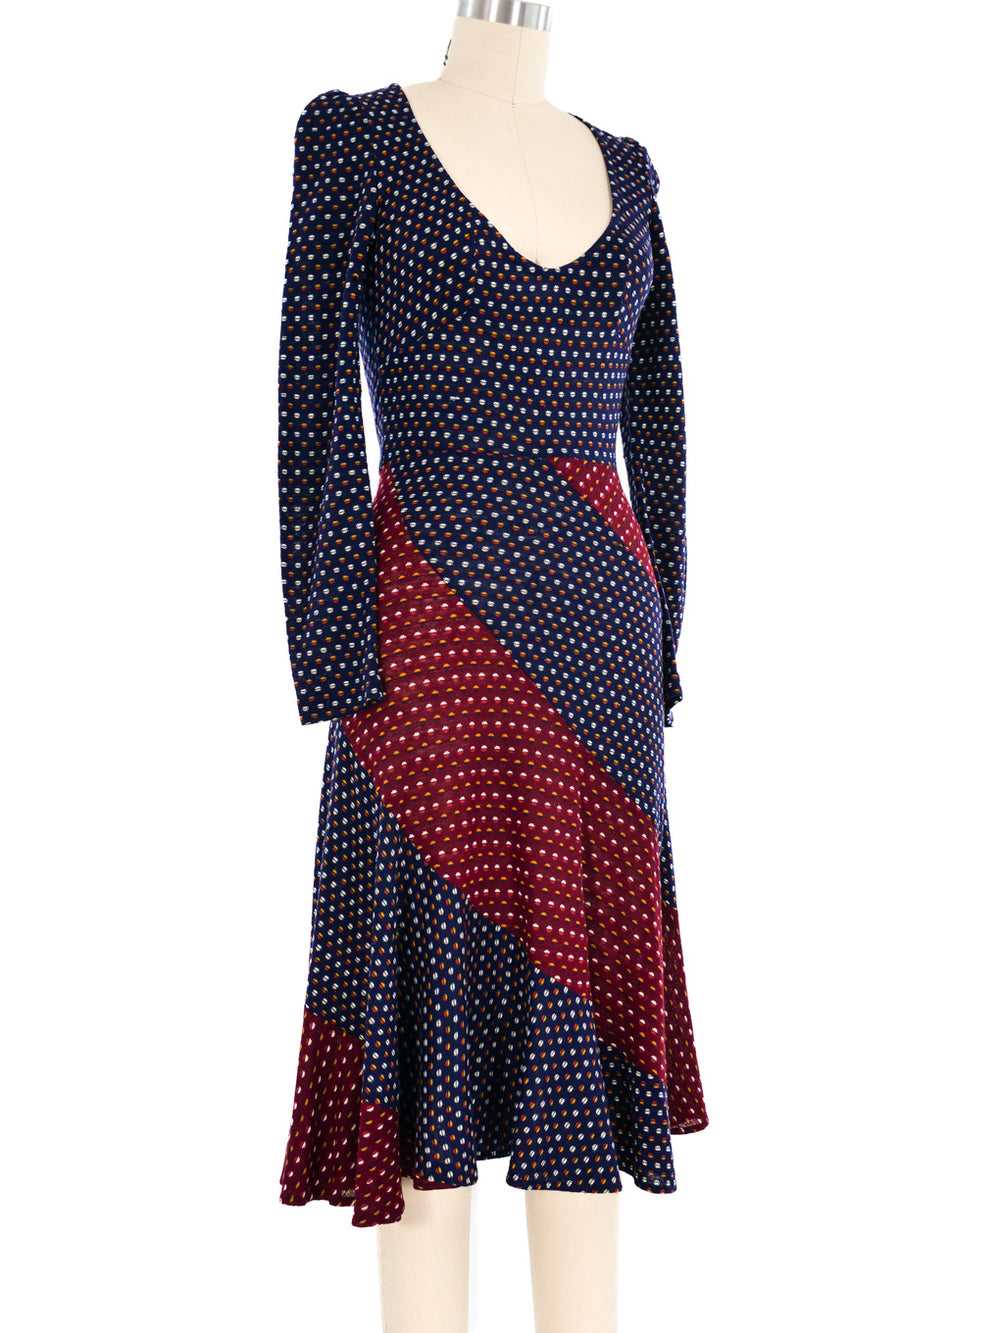 1970's Patchwork Knit Dress - image 3